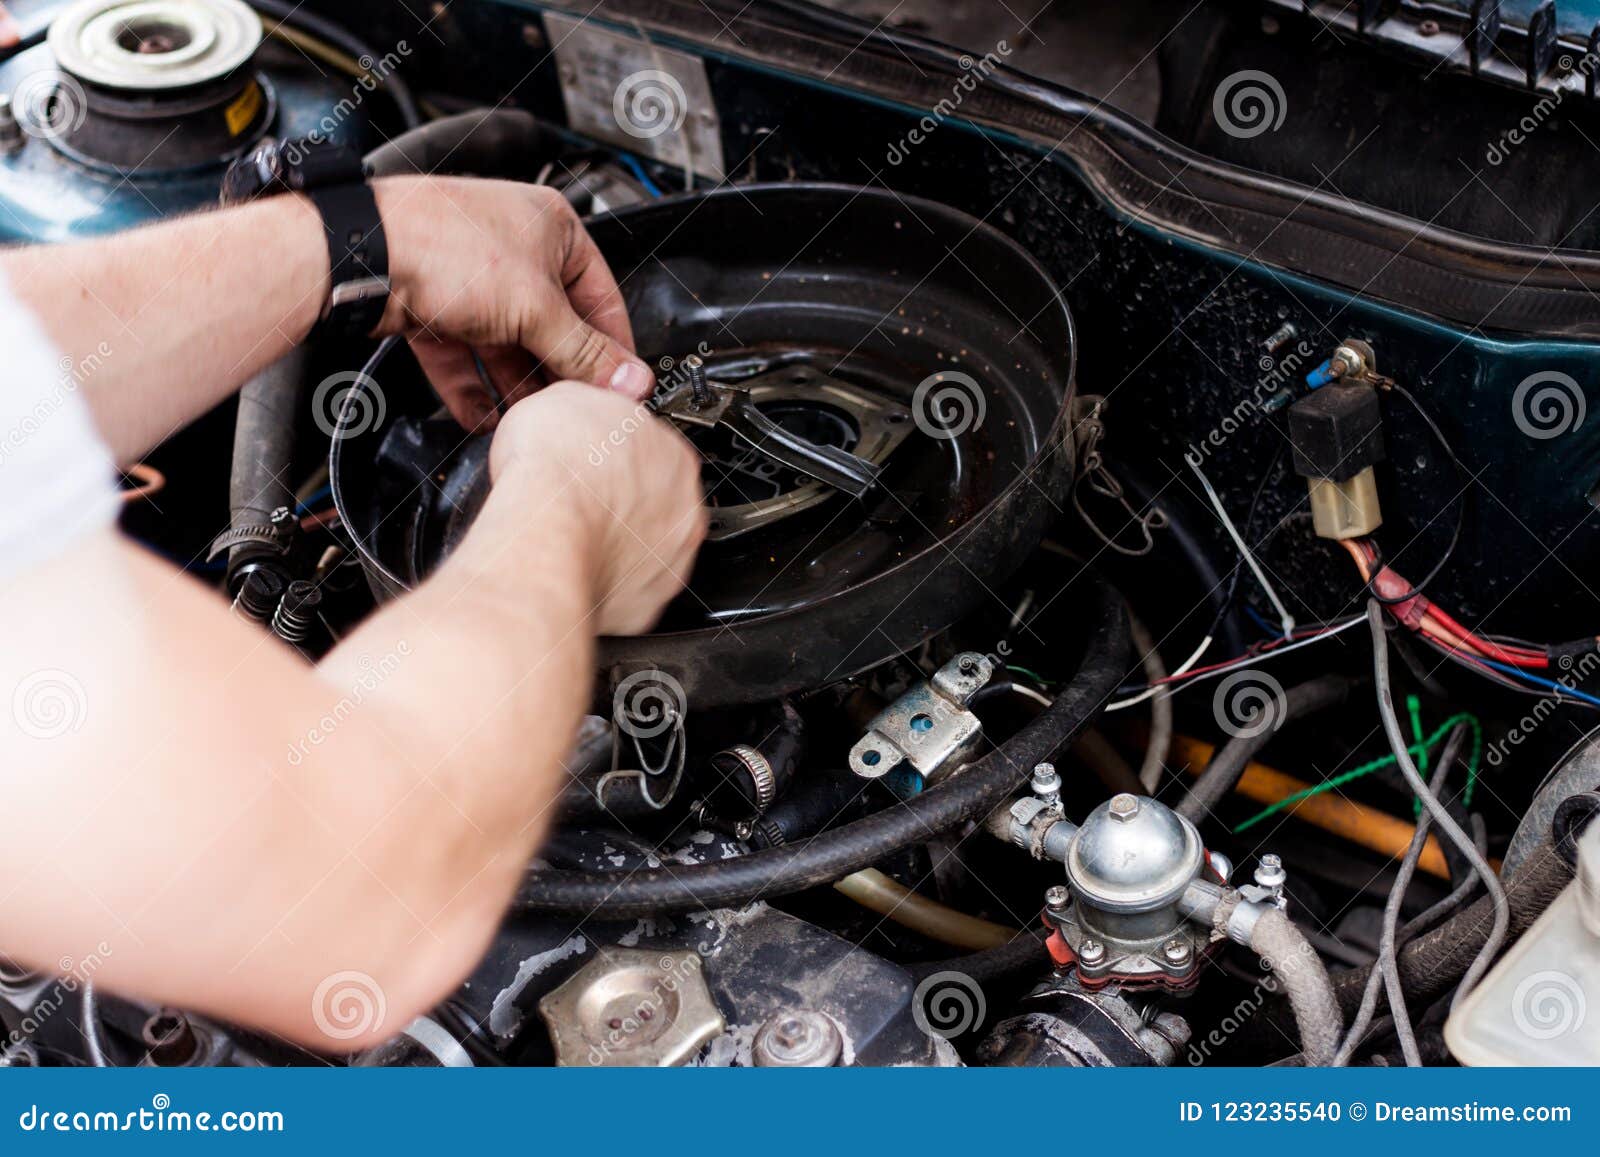 car engine repair service